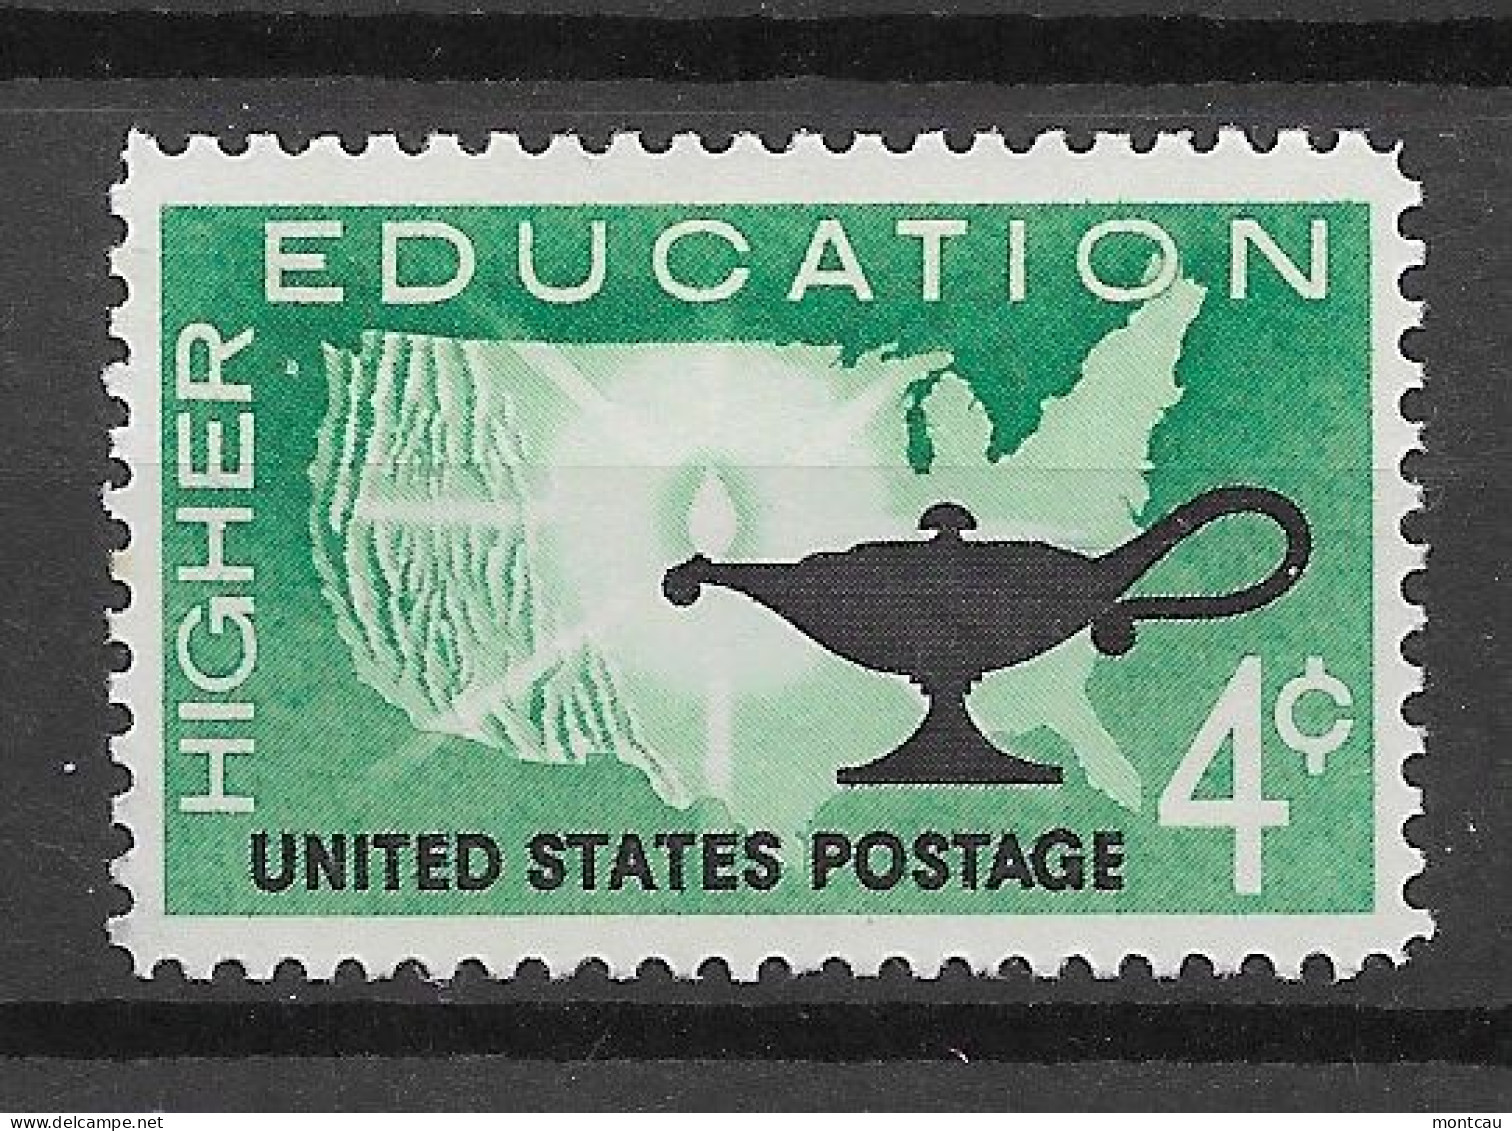 USA 1962.  Education Sc 1206  (**) - Ongebruikt